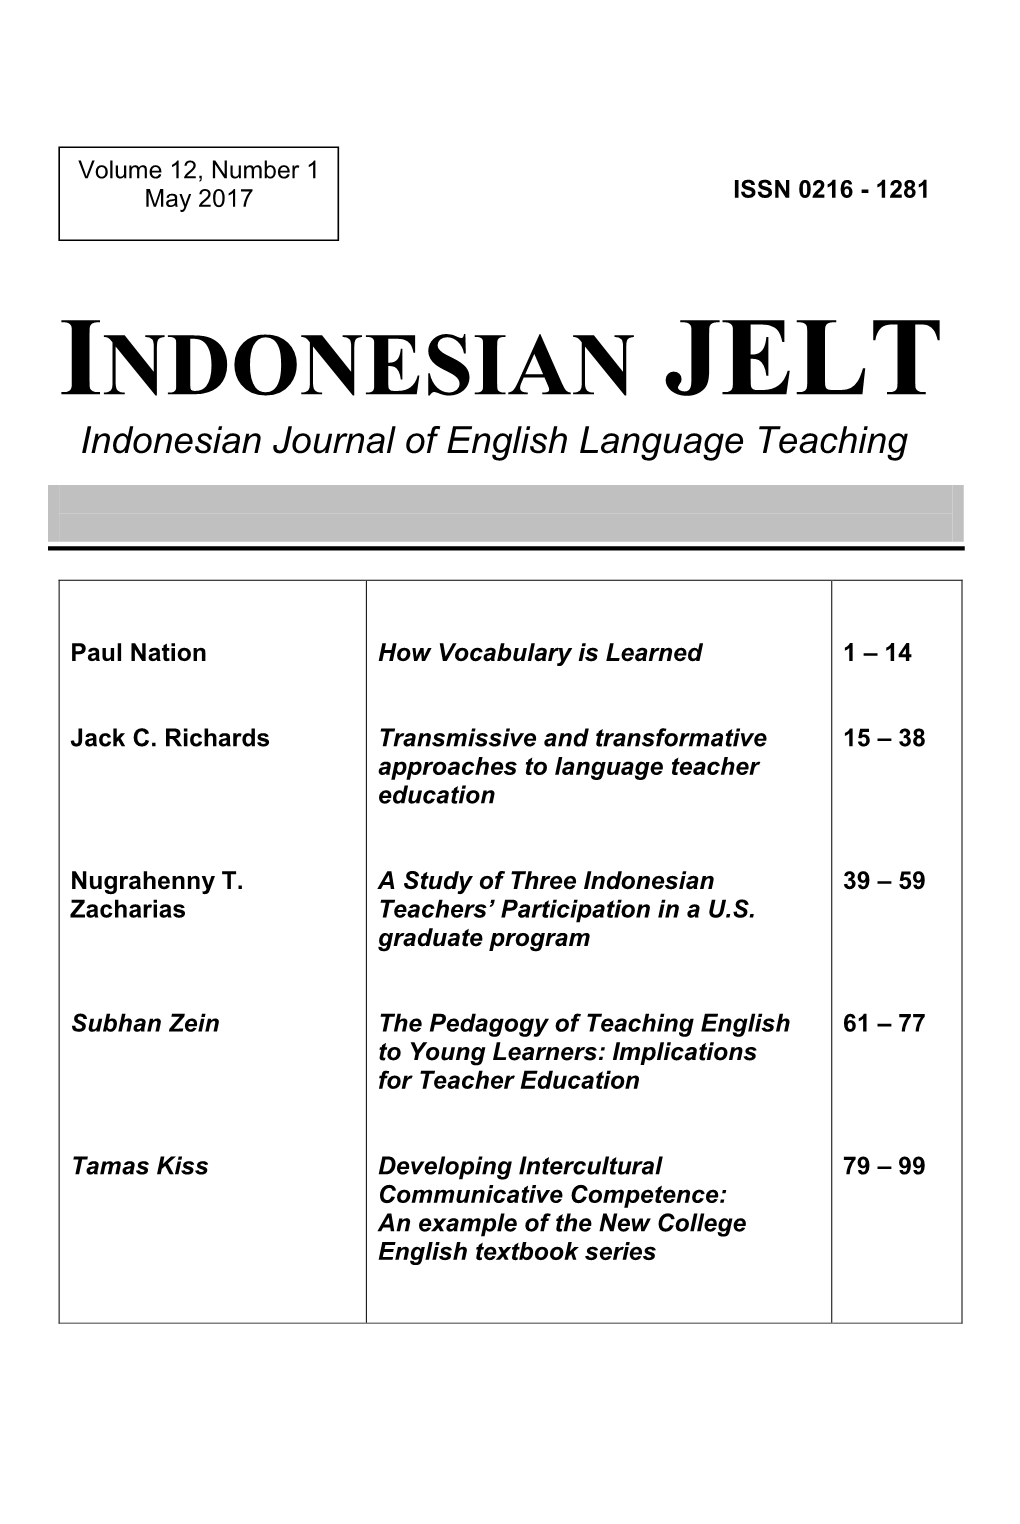 INDONESIAN JELT Indonesian Journal of English Language Teaching